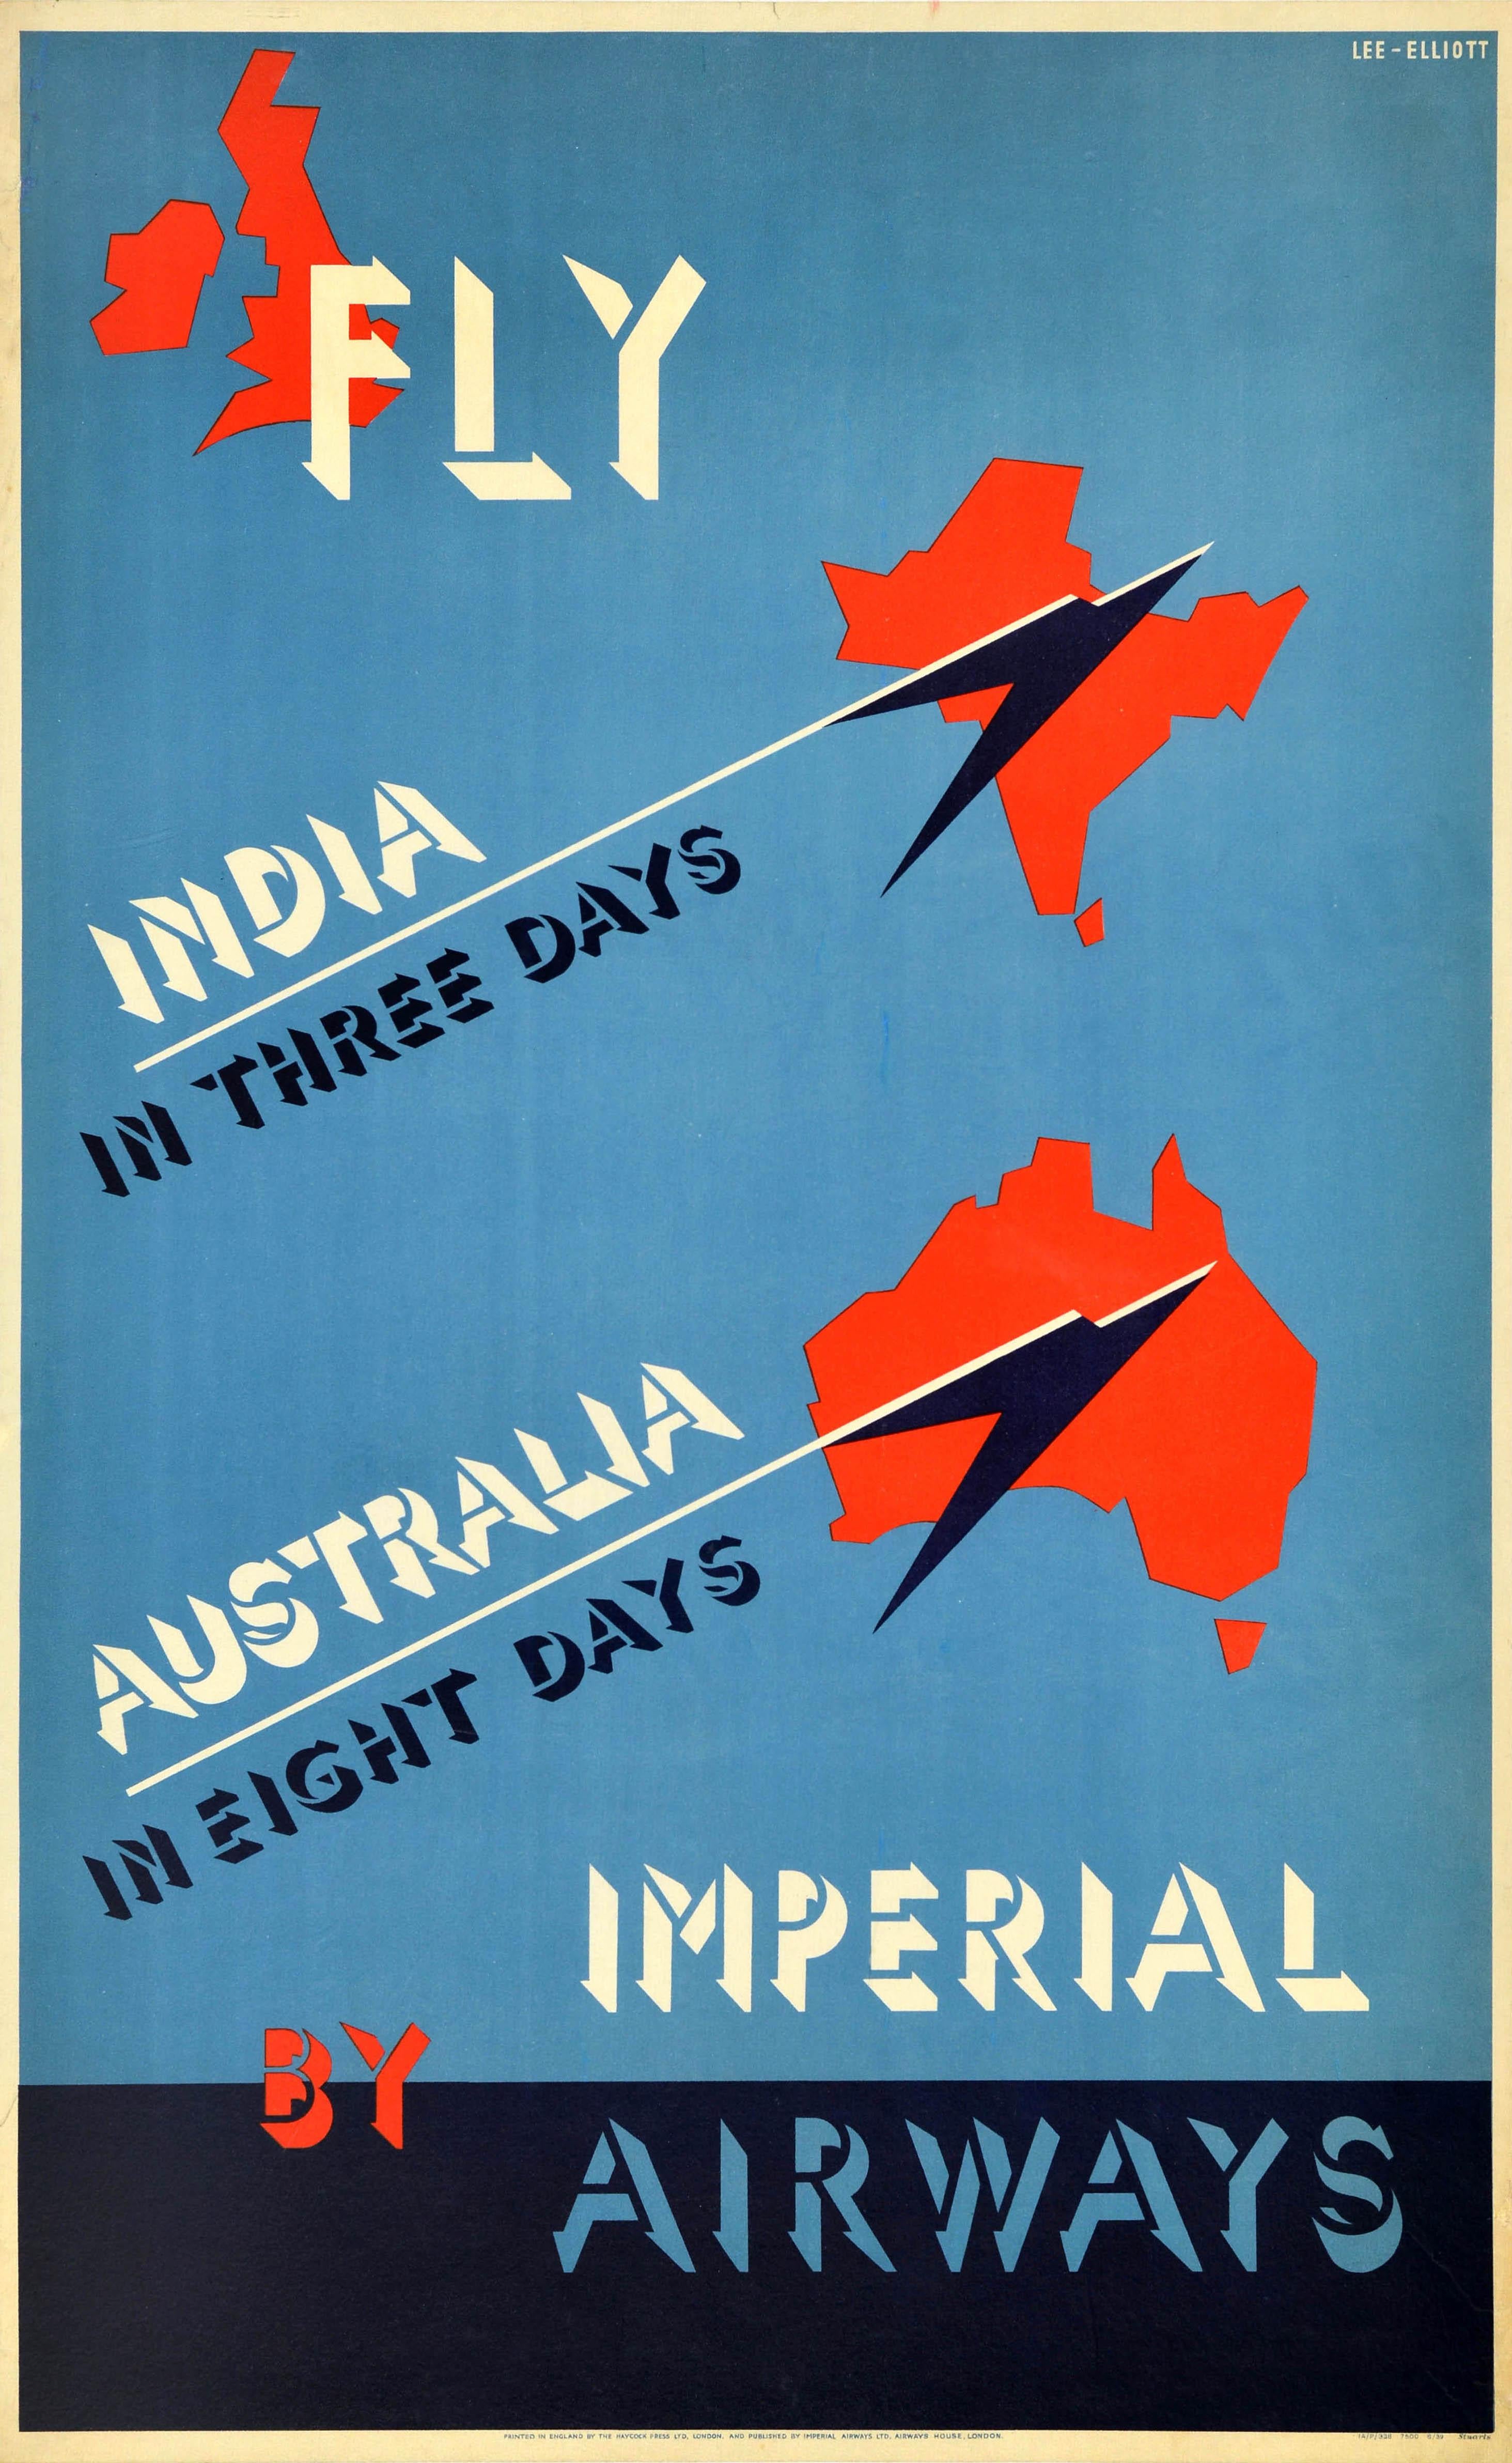 David Lee Theyre Elliott Print - Original Vintage Travel Advertising Poster Fly Imperial Airways India Australia